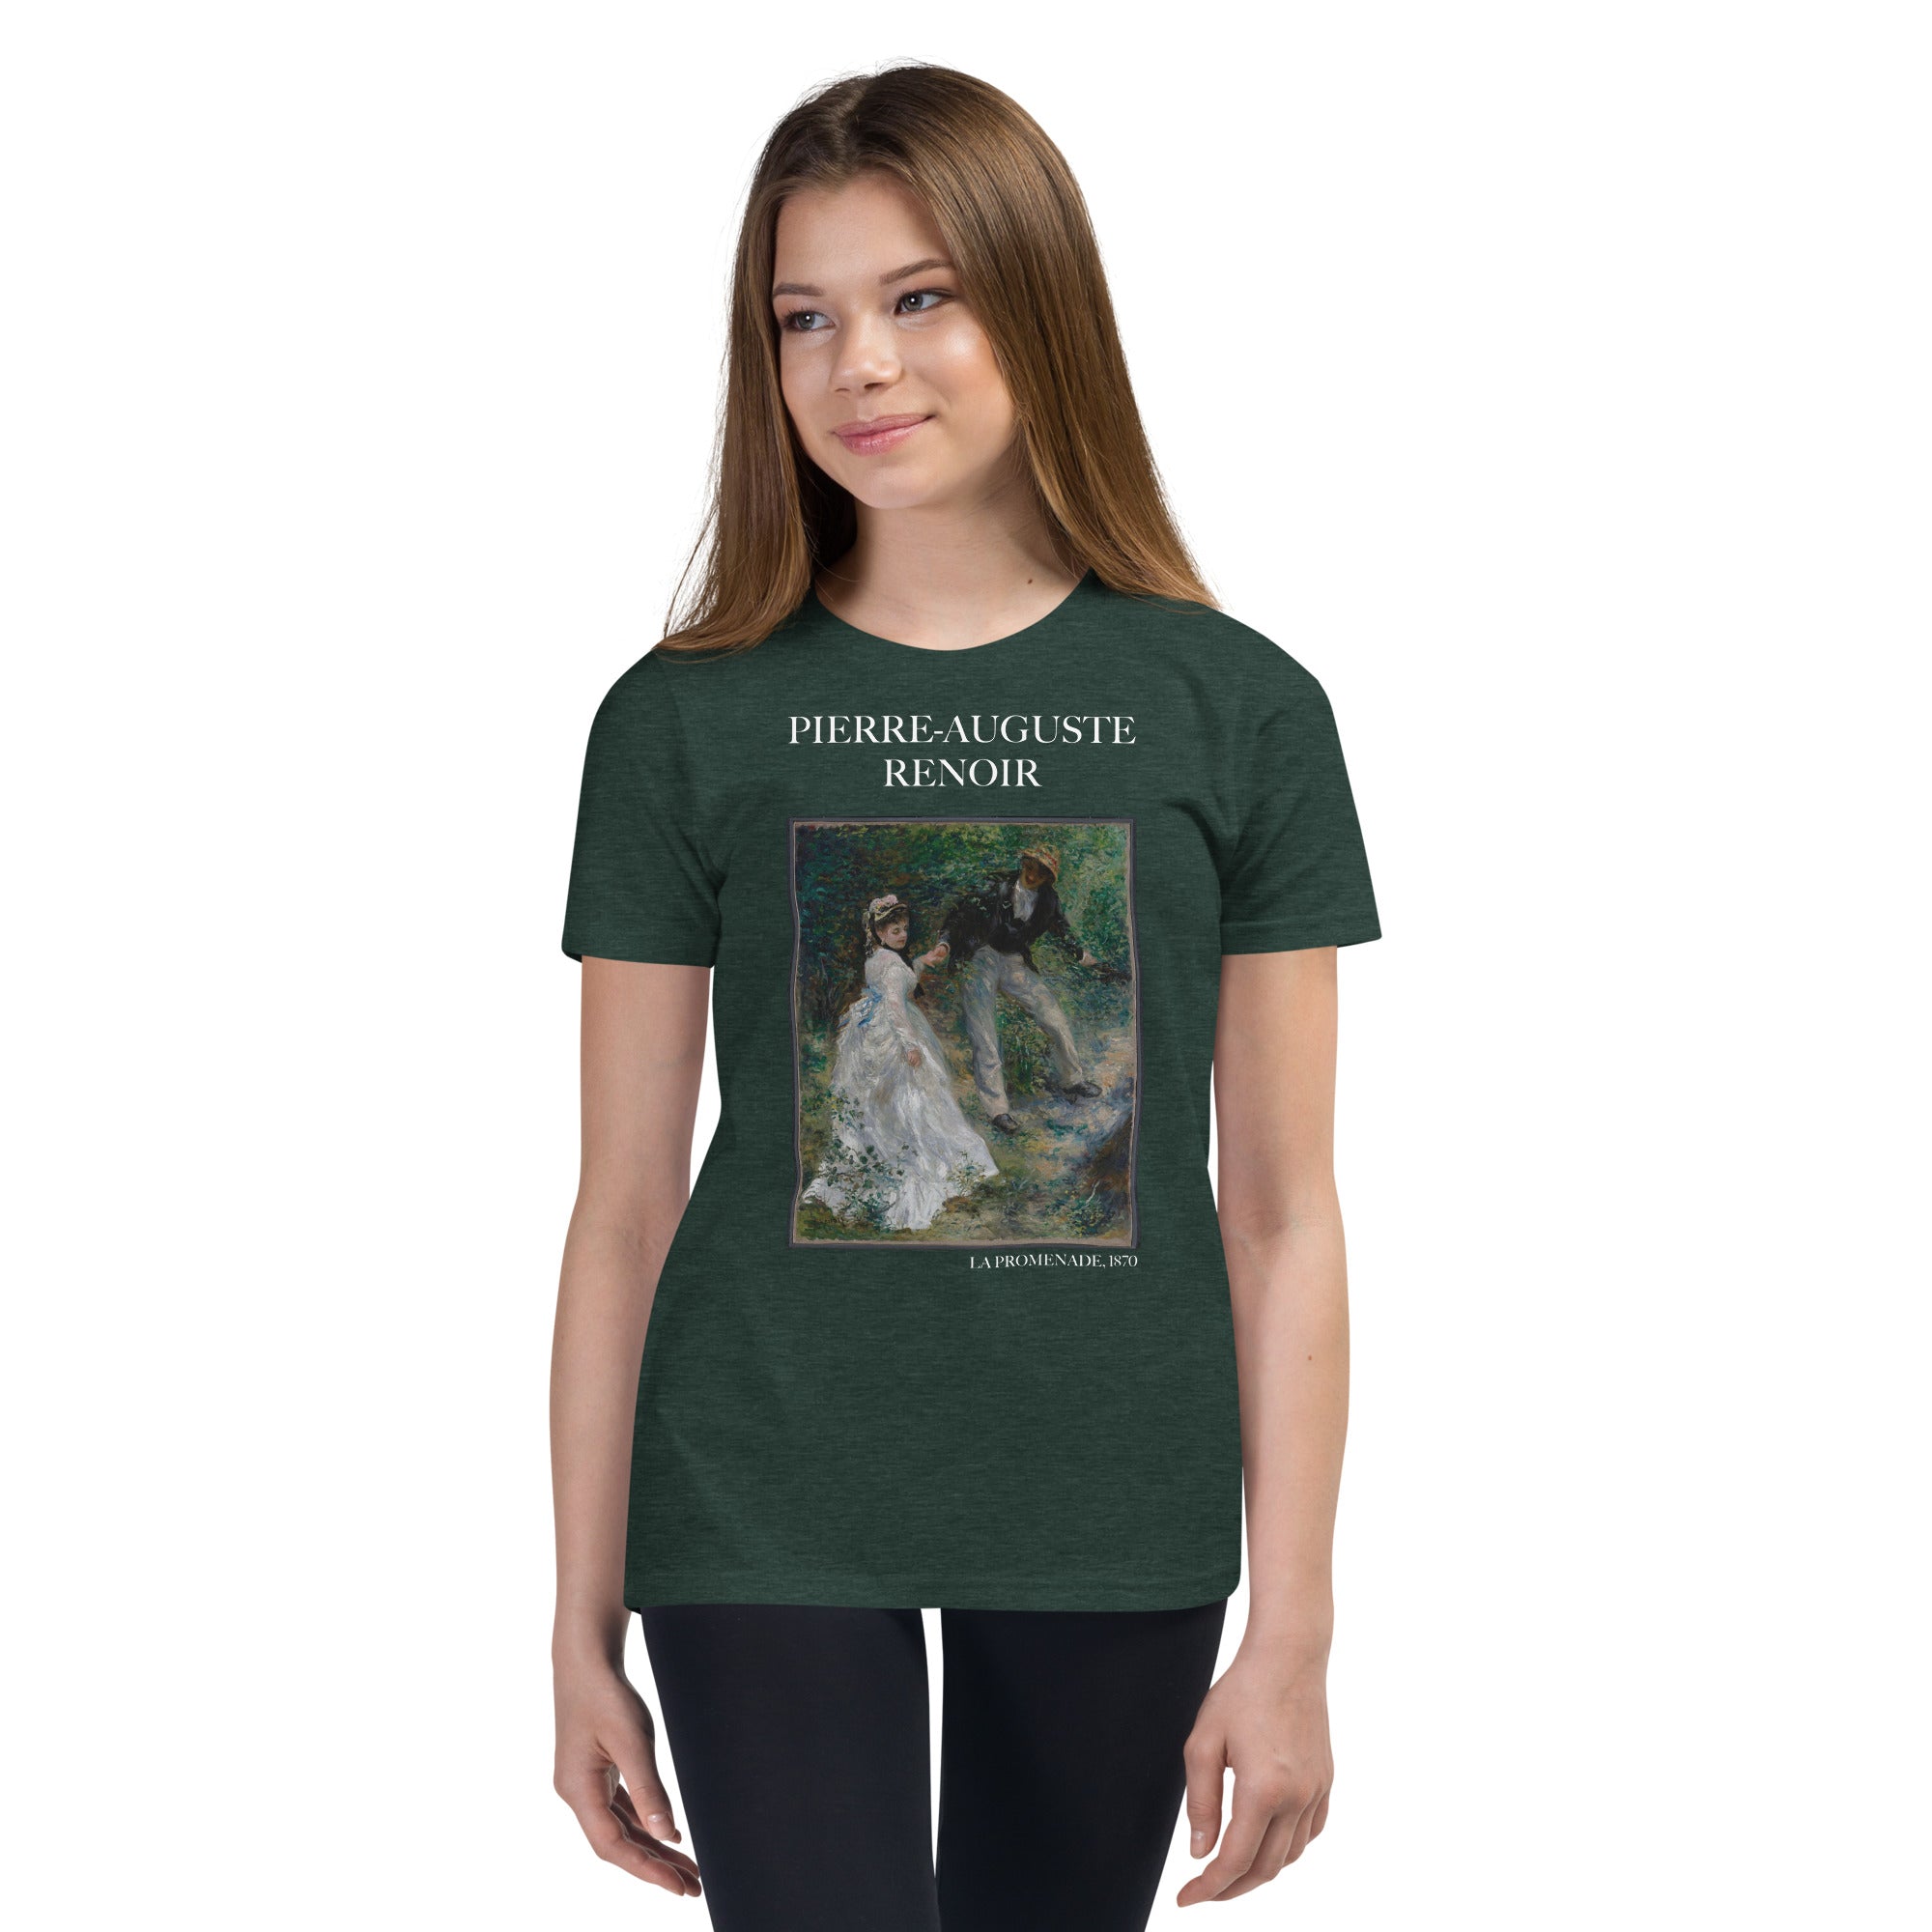 Pierre-Auguste Renoir 'La Promenade' Famous Painting Short Sleeve T-Shirt | Premium Youth Art Tee